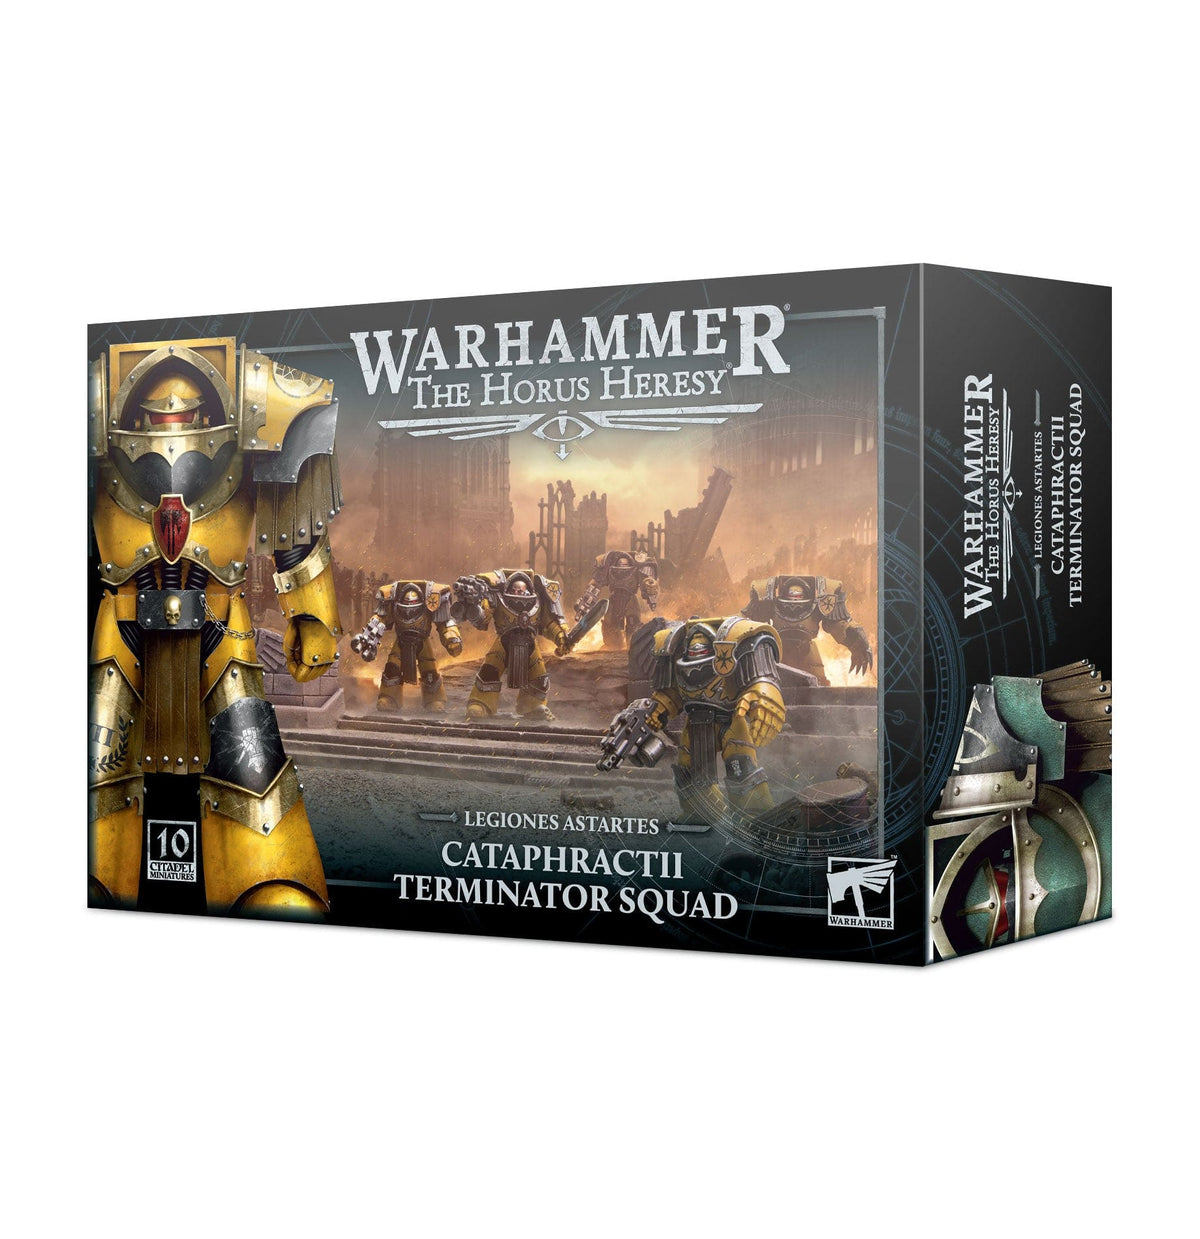 Warhammer - Horus Heresy: Legiones Astartes - Cataphractii Terminator Squad - Third Eye